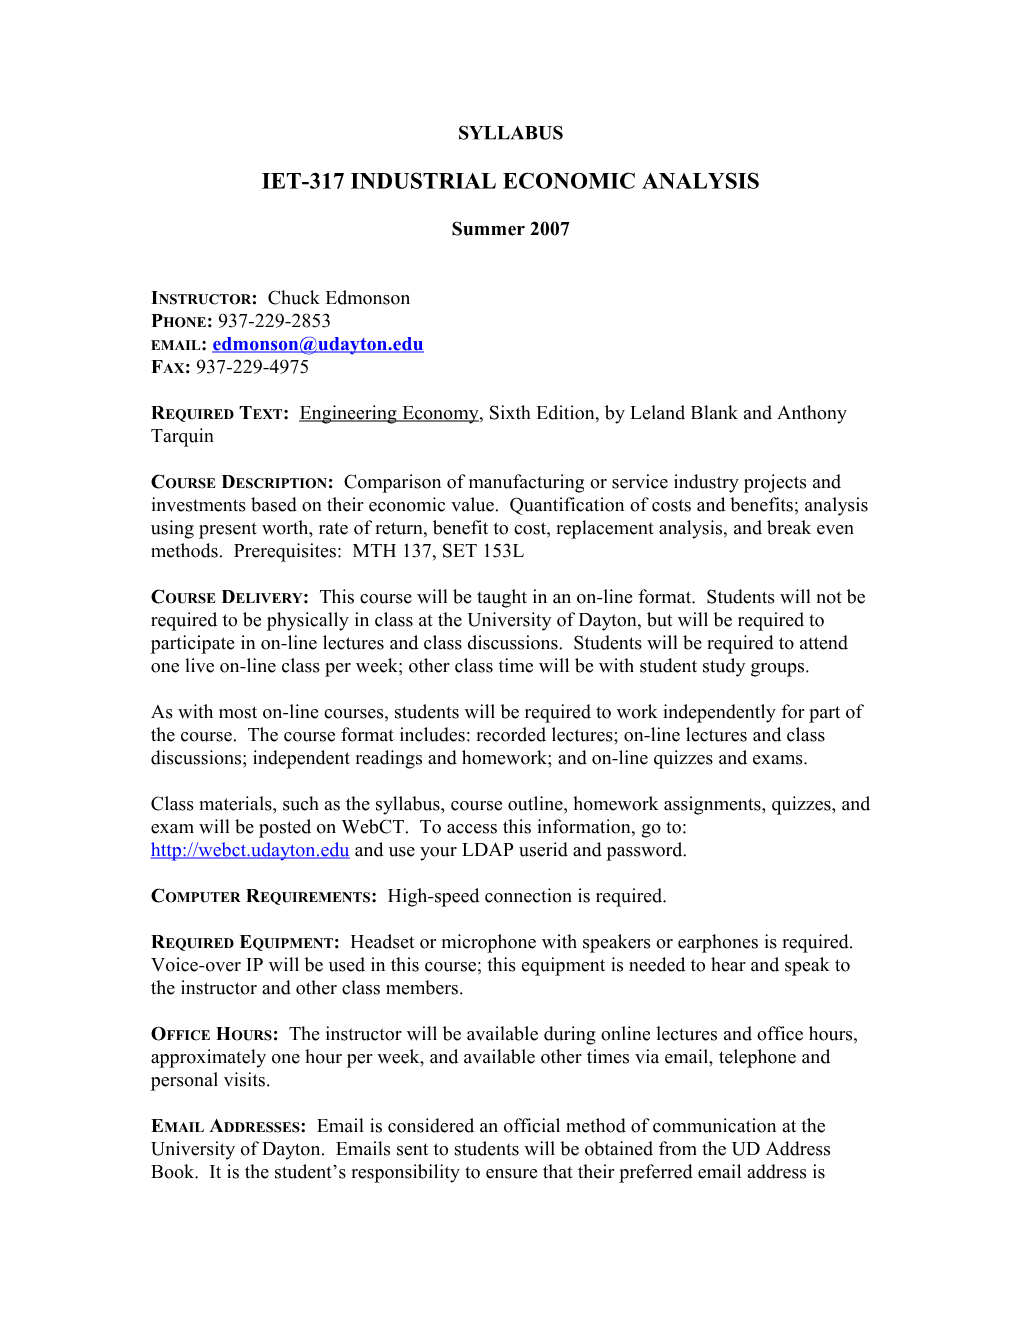 Iet-317 Industrial Economic Analysis